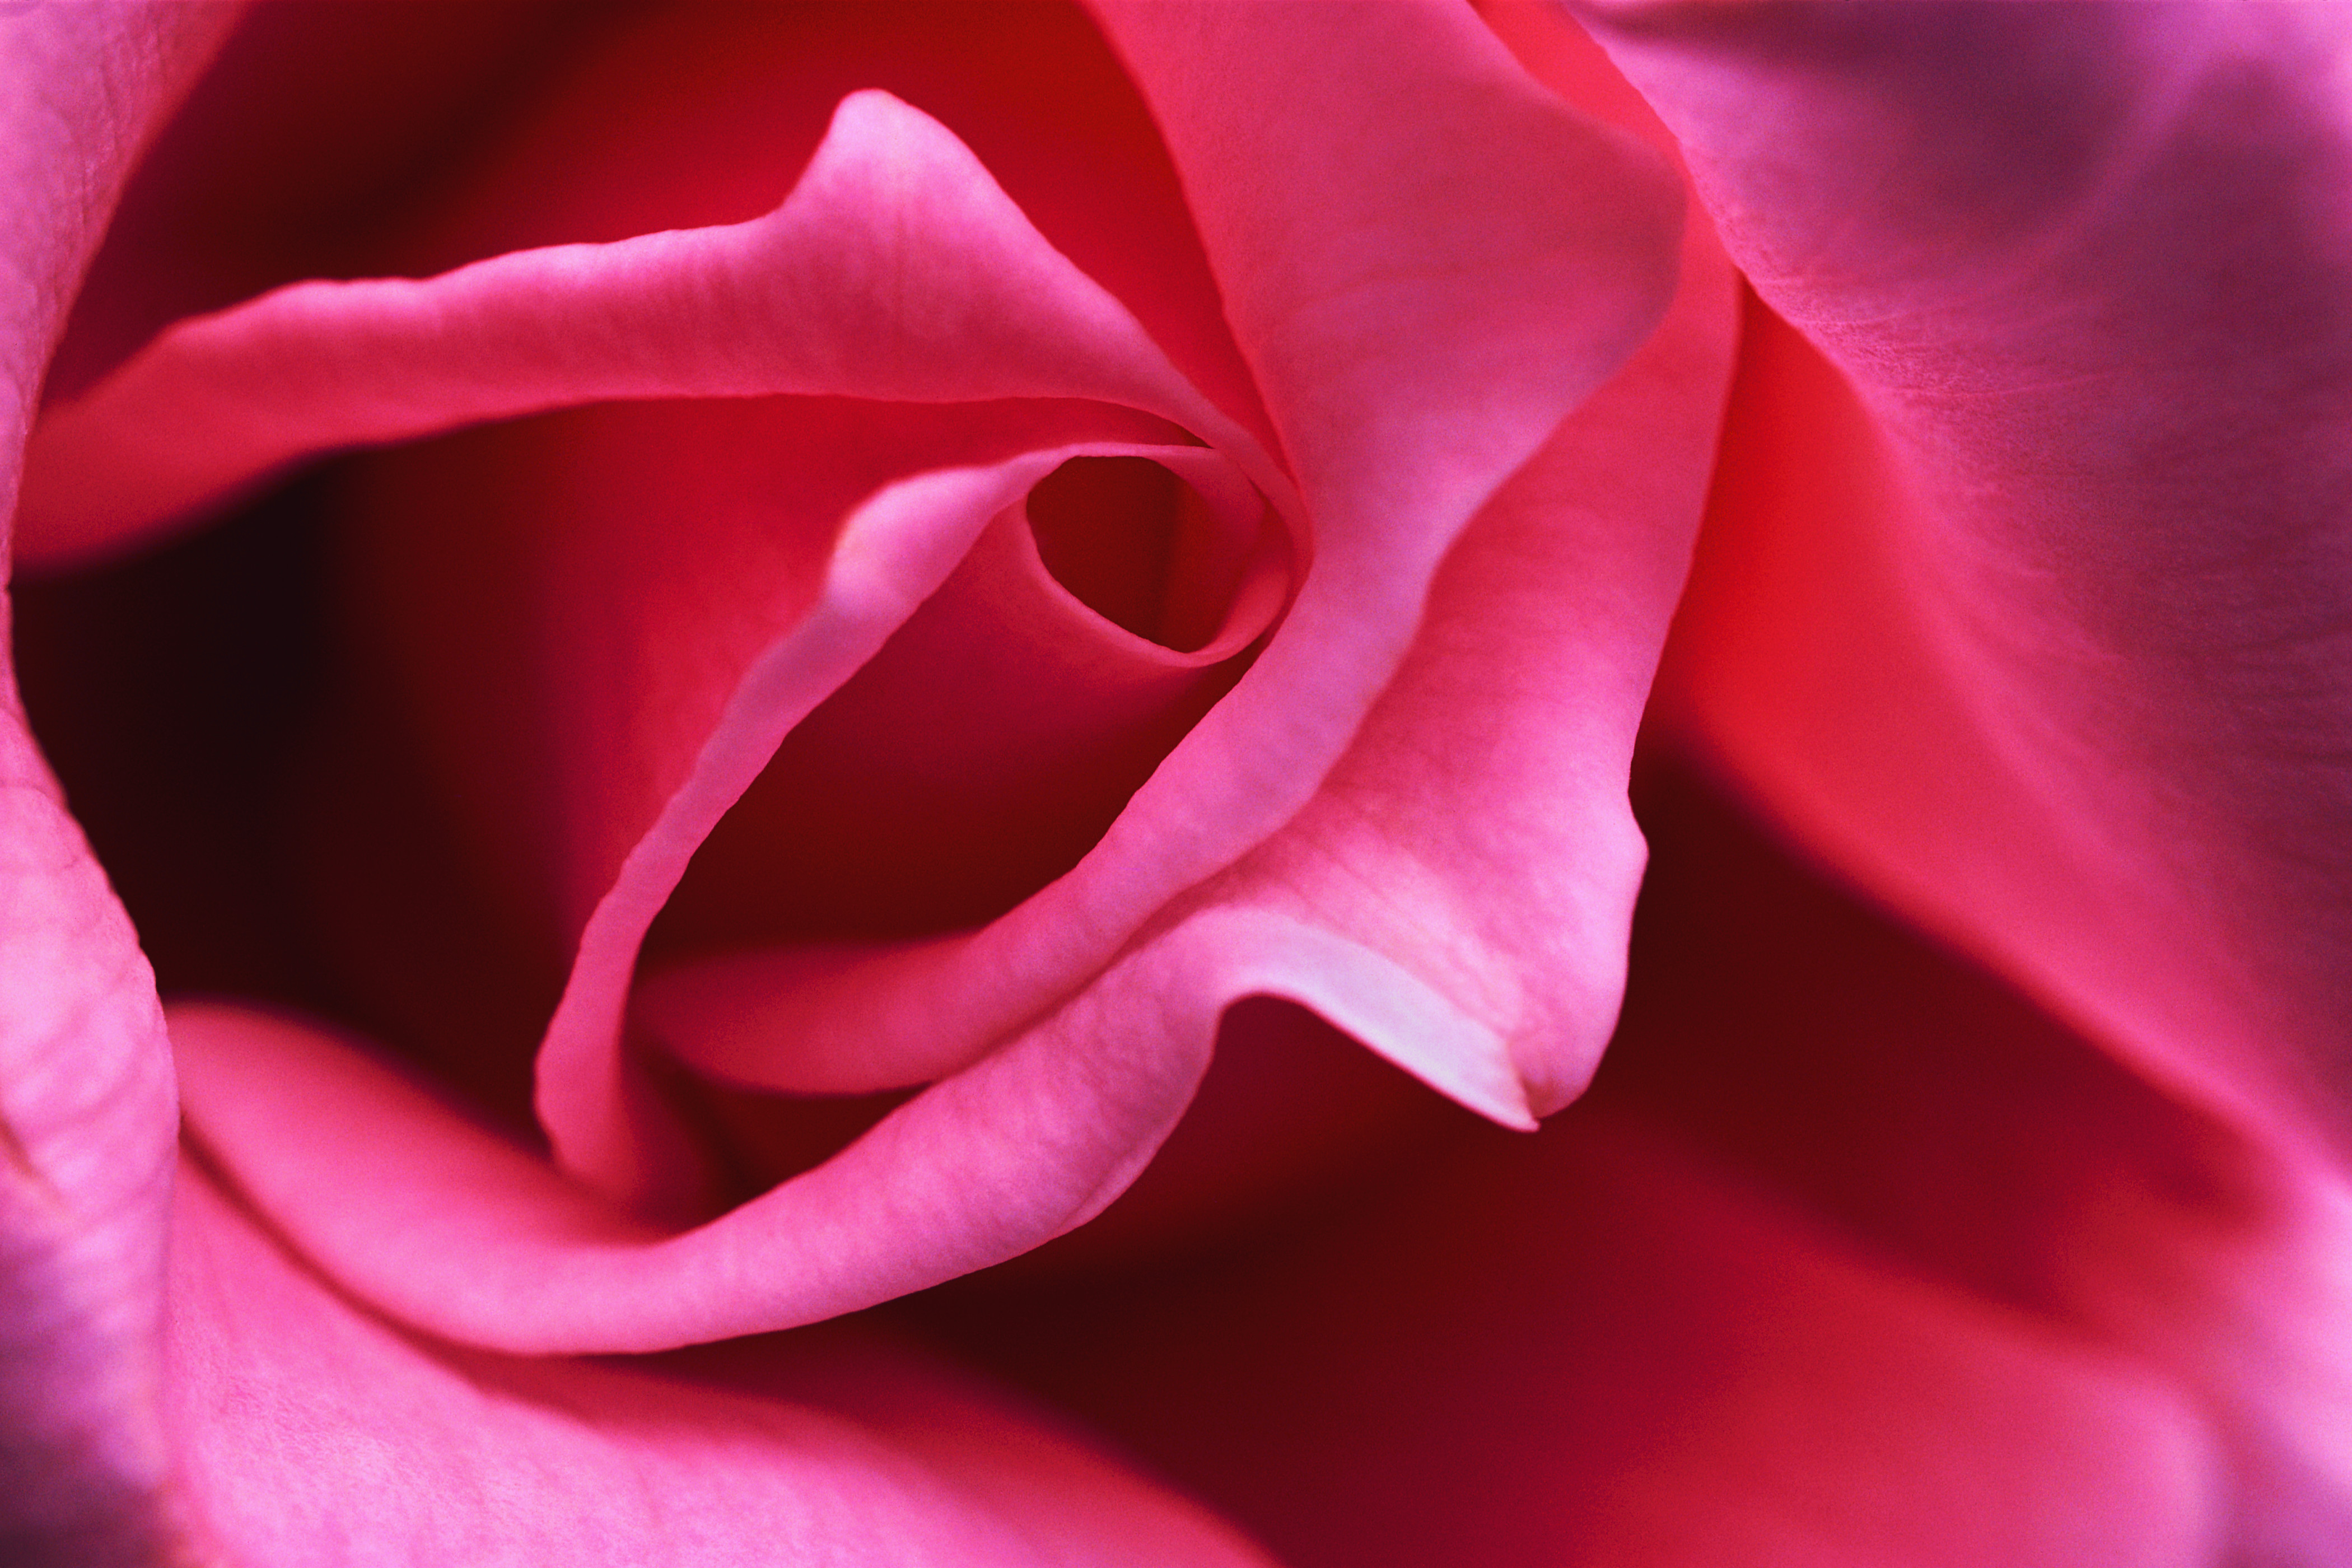 Close-up View of a Pink Rose | Macmillan Dictionary Blog